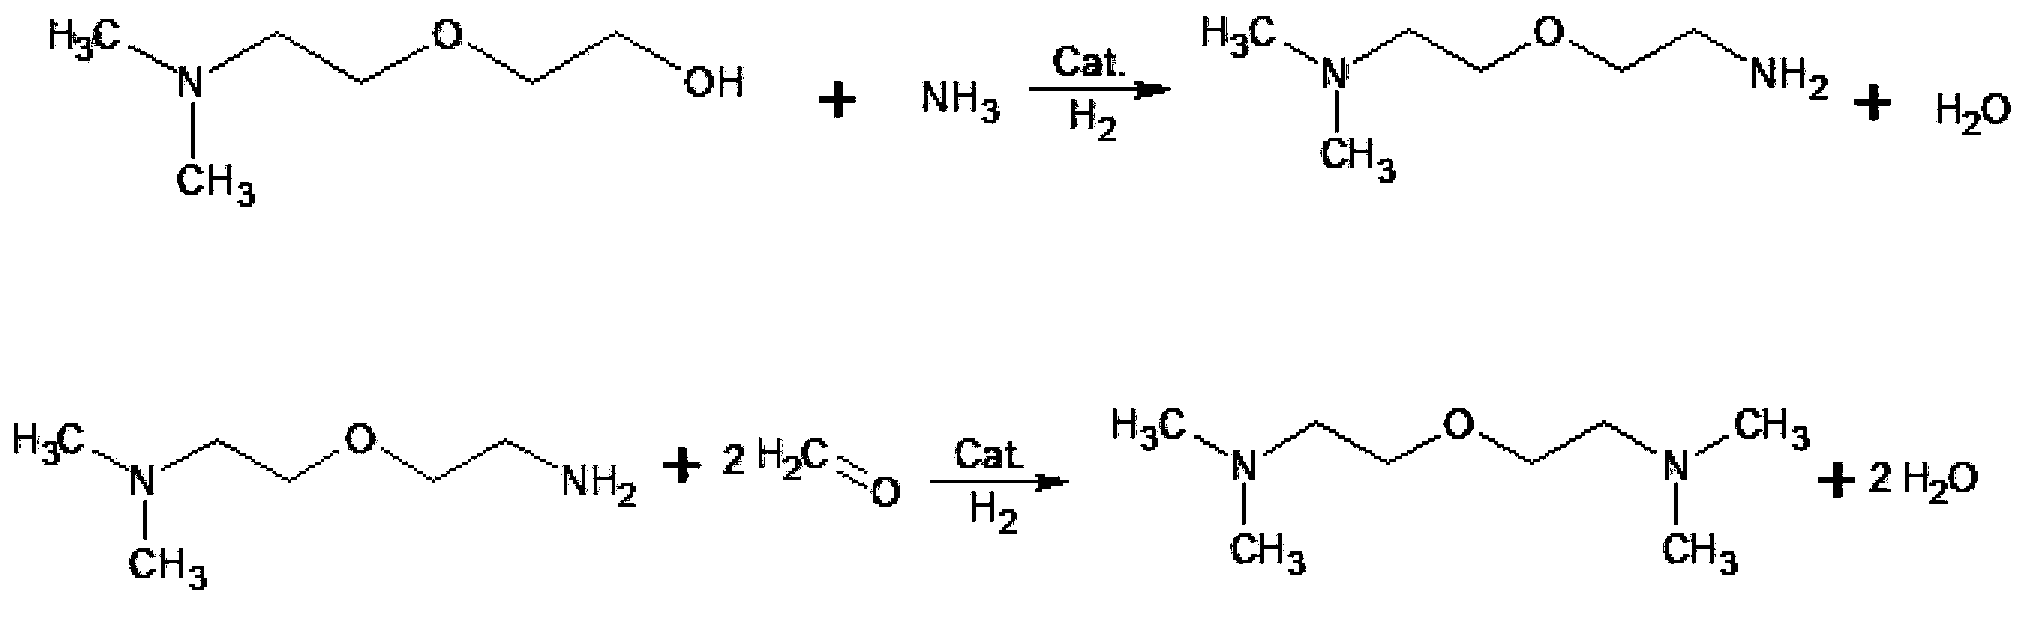 Preparation method of bis(2-dimethyl aminoethyl) ether